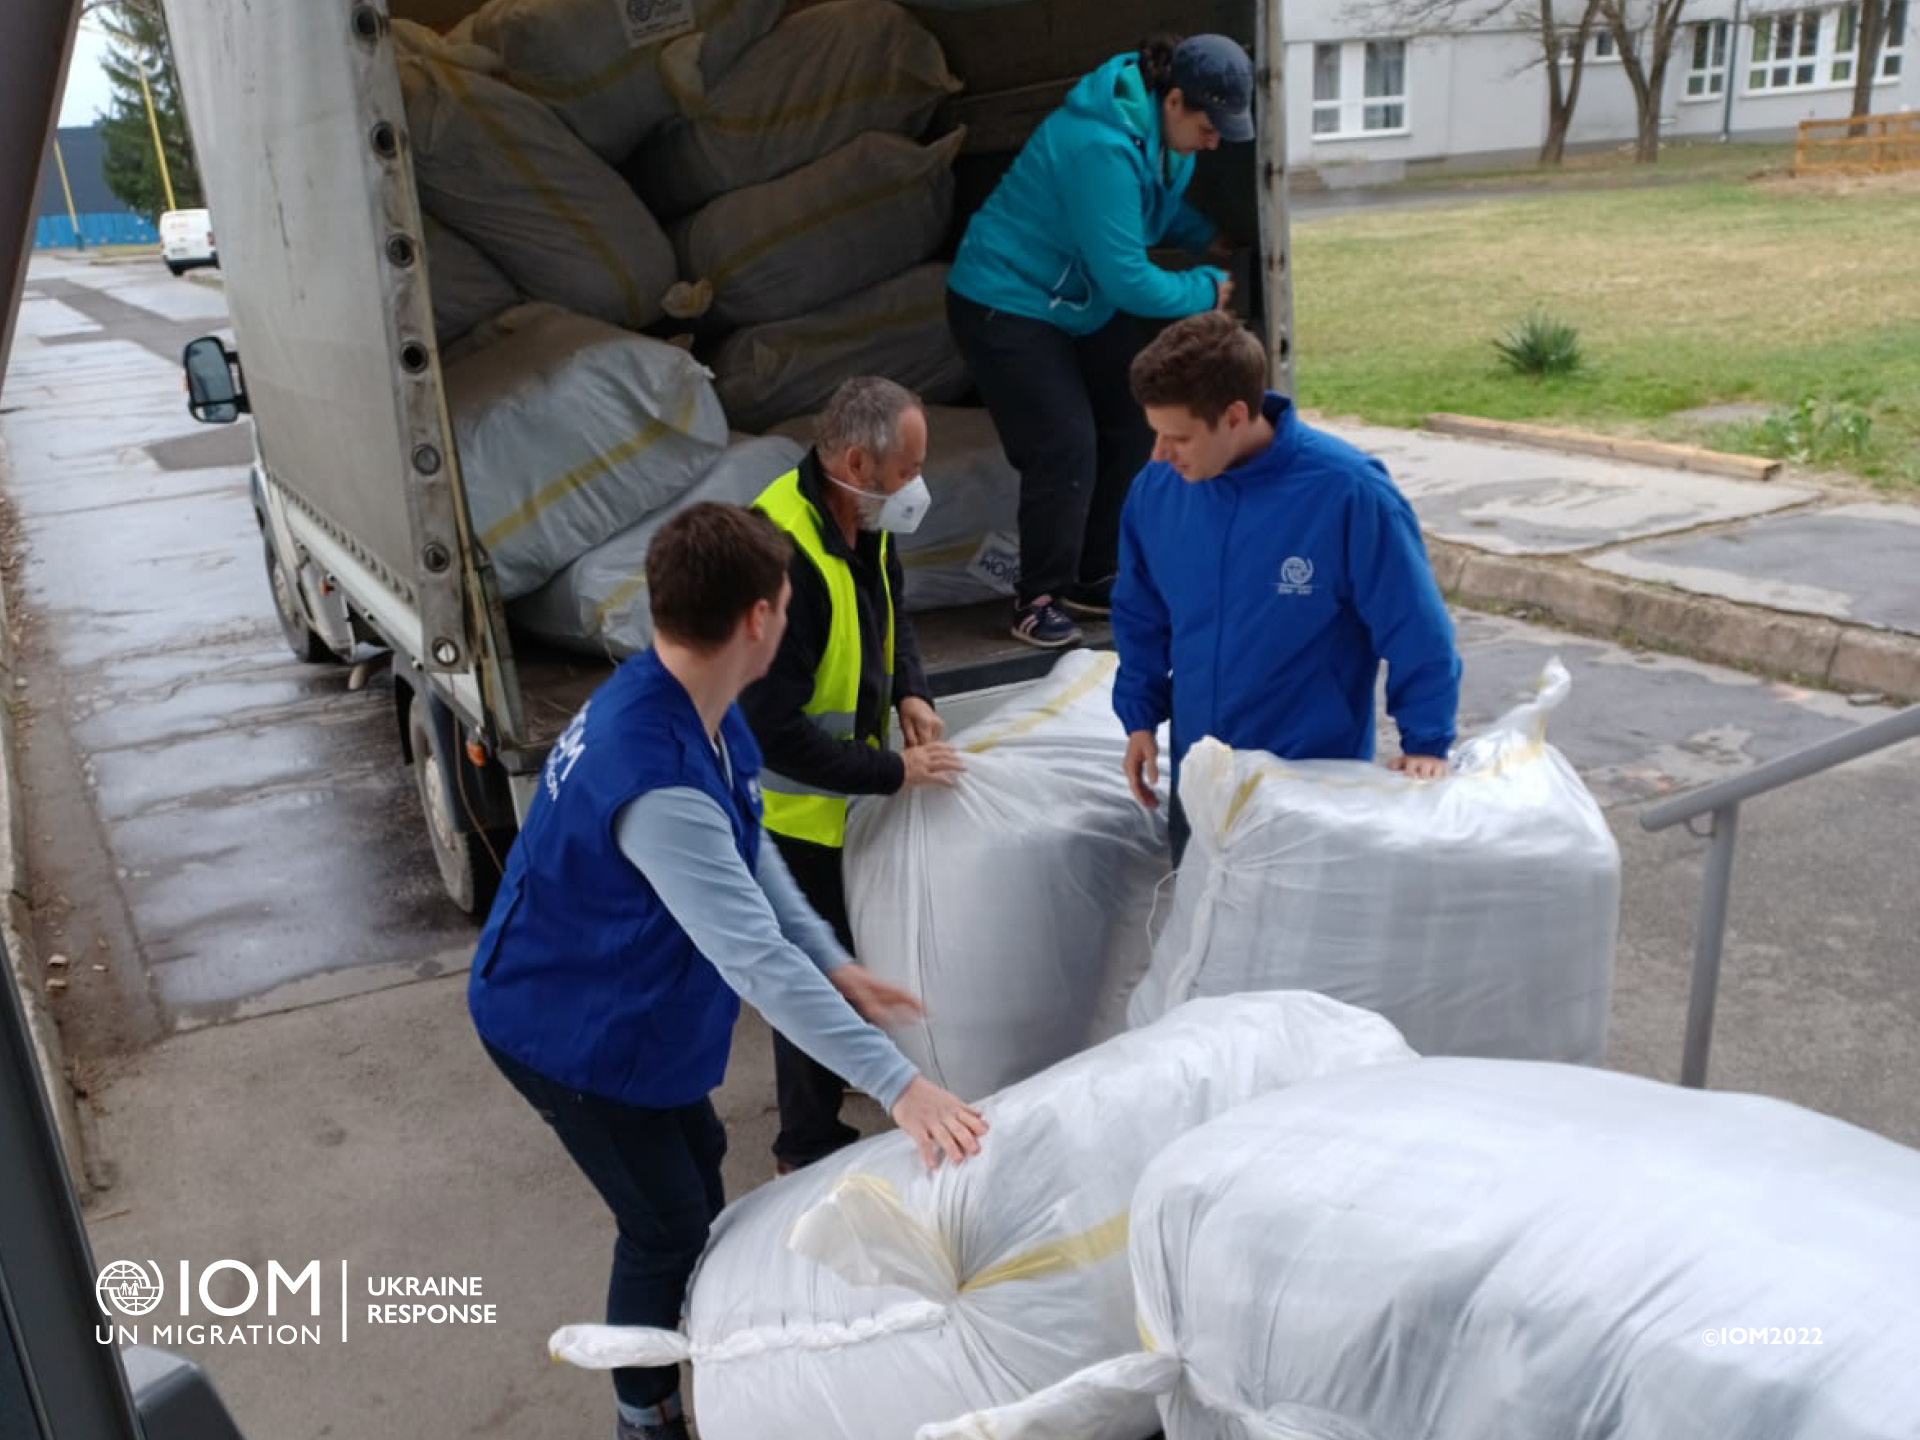 Blankets distribution at Kosice Municipality Humanitarian Warehouse. Photo © International Organization for Migration (IOM) 2022.